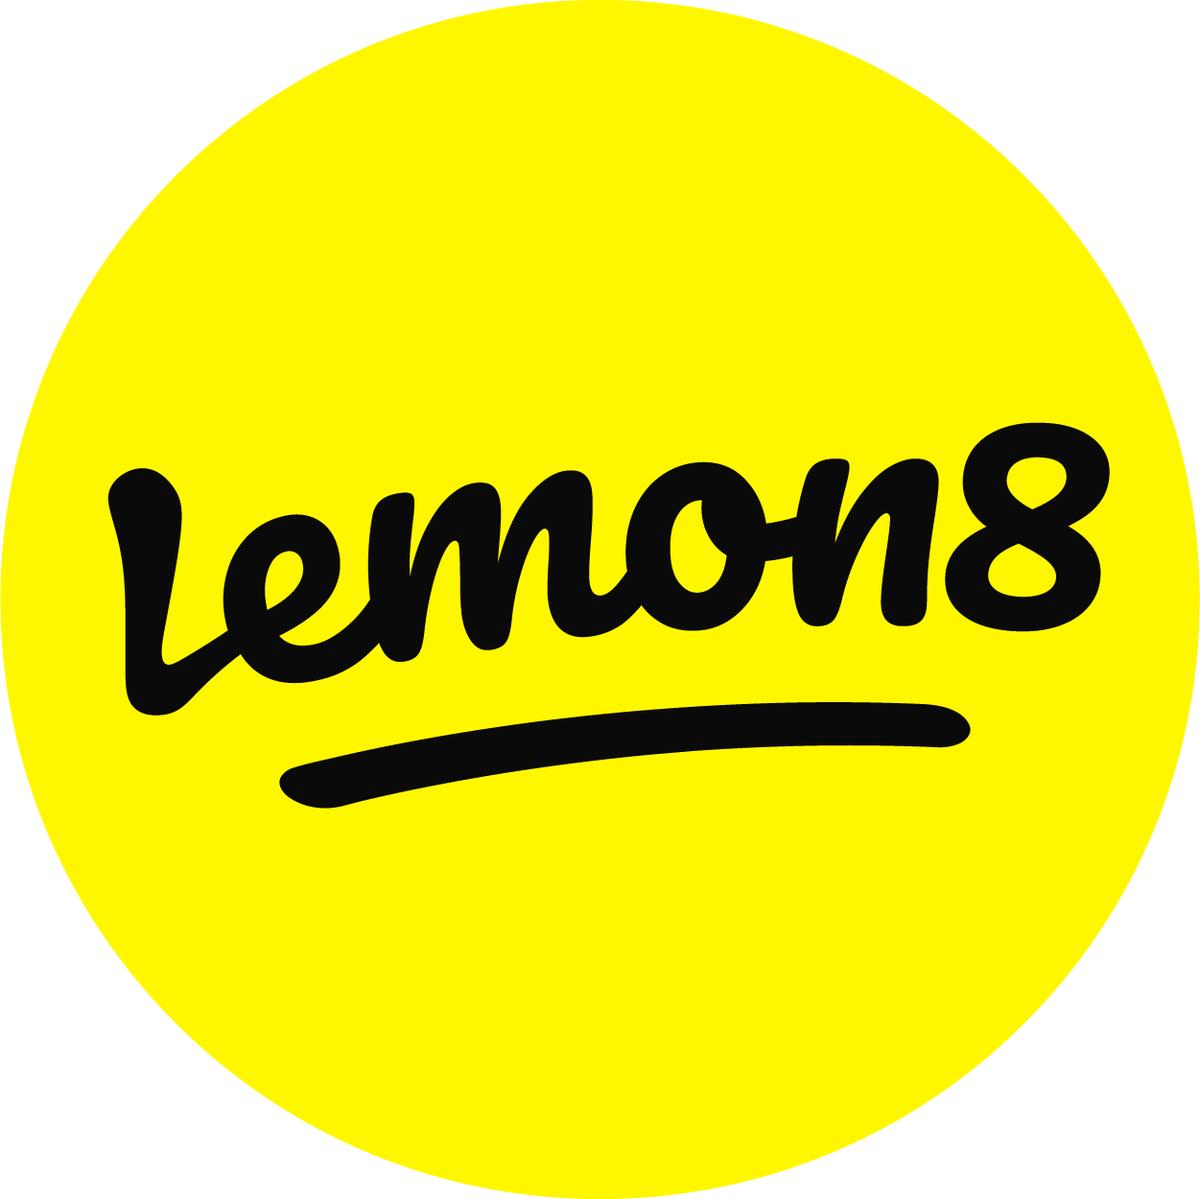 Lemon8_ID's images